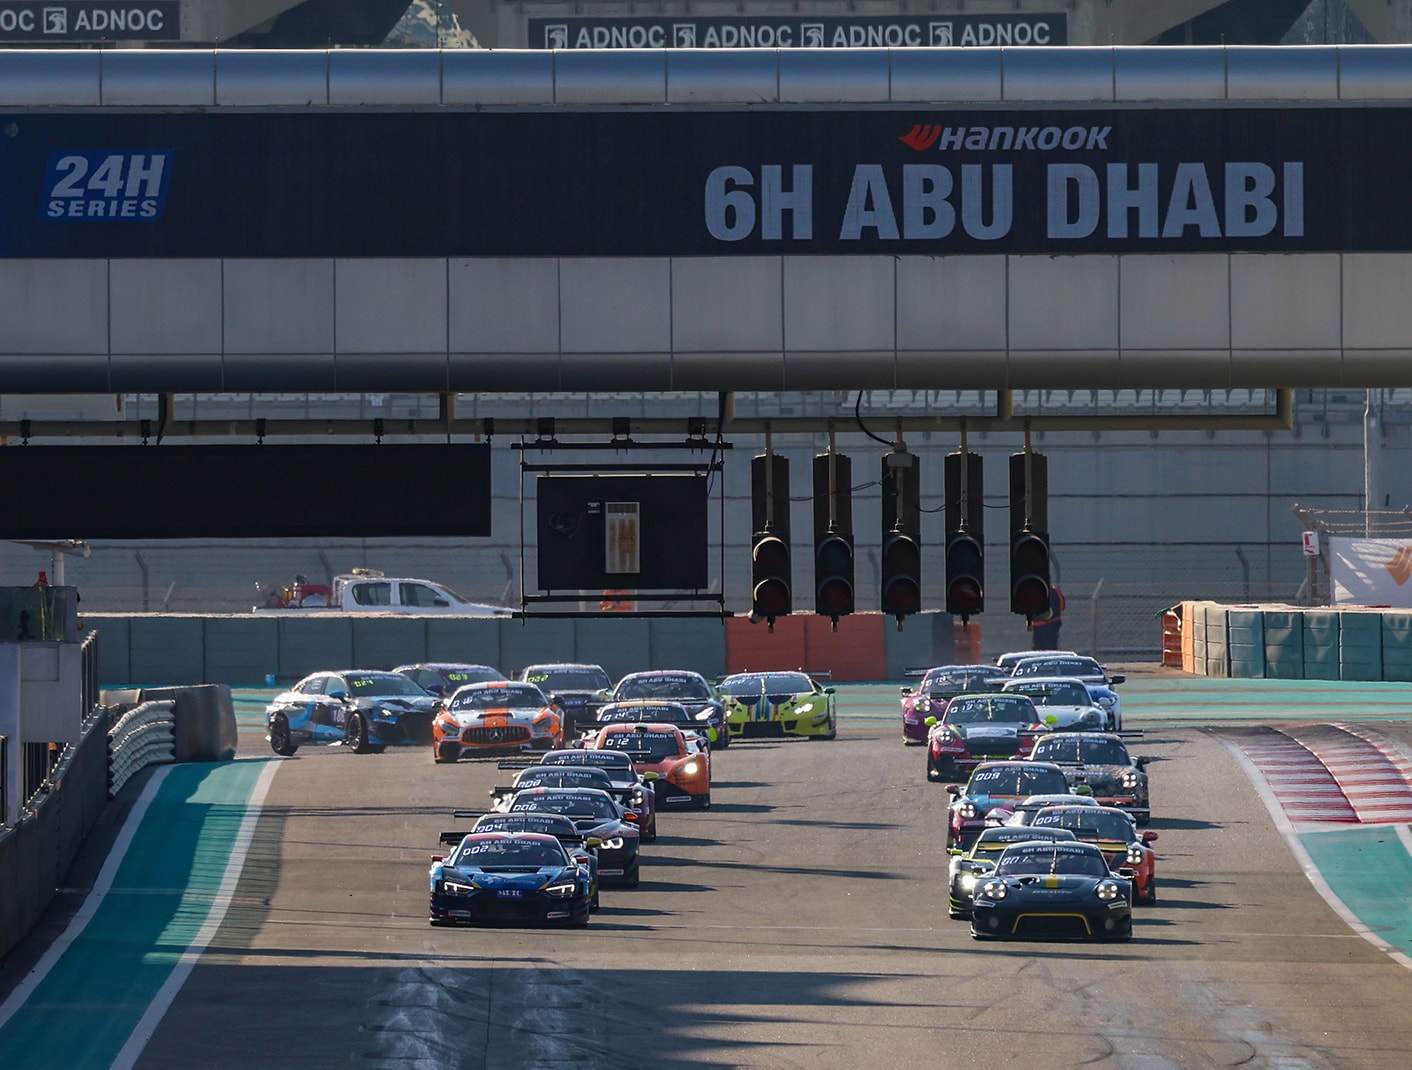 International endurance racing season kicks off in Abu Dhabi with the new Hankook race tire